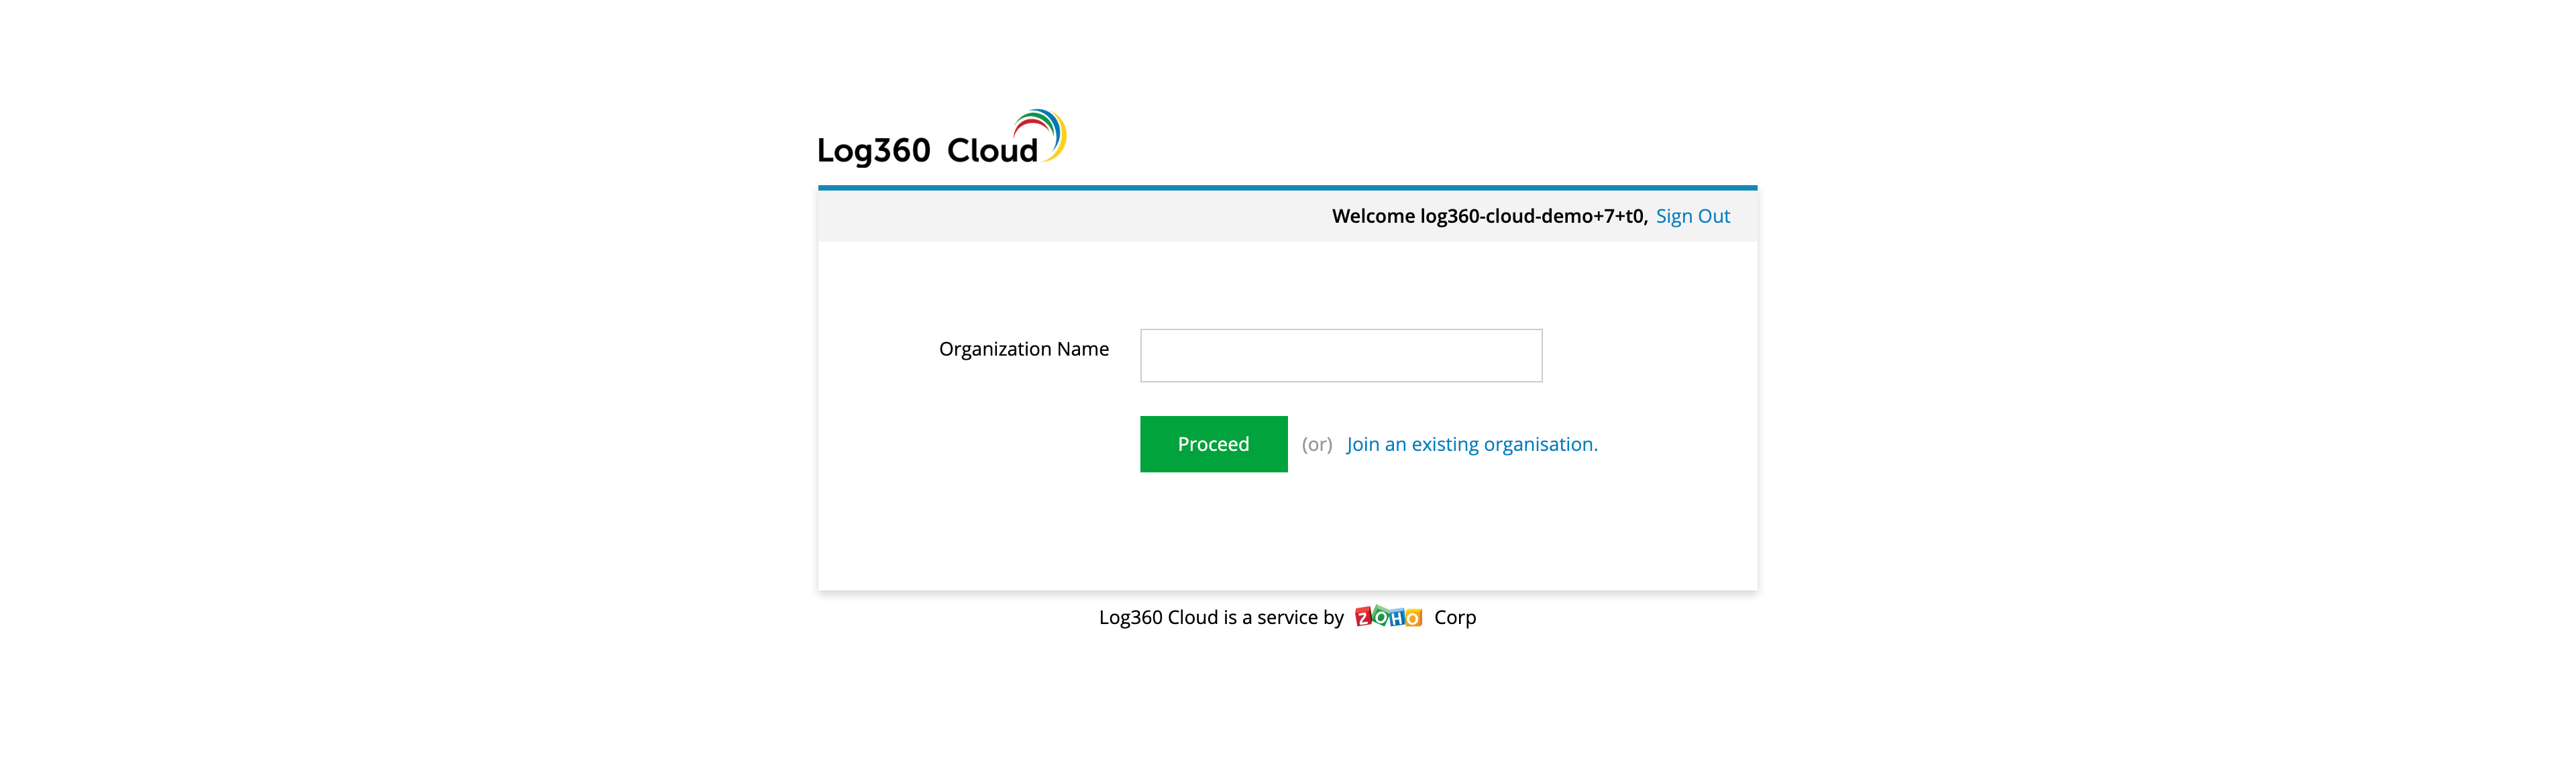 welcome-log360-cloud-demo-organization-name